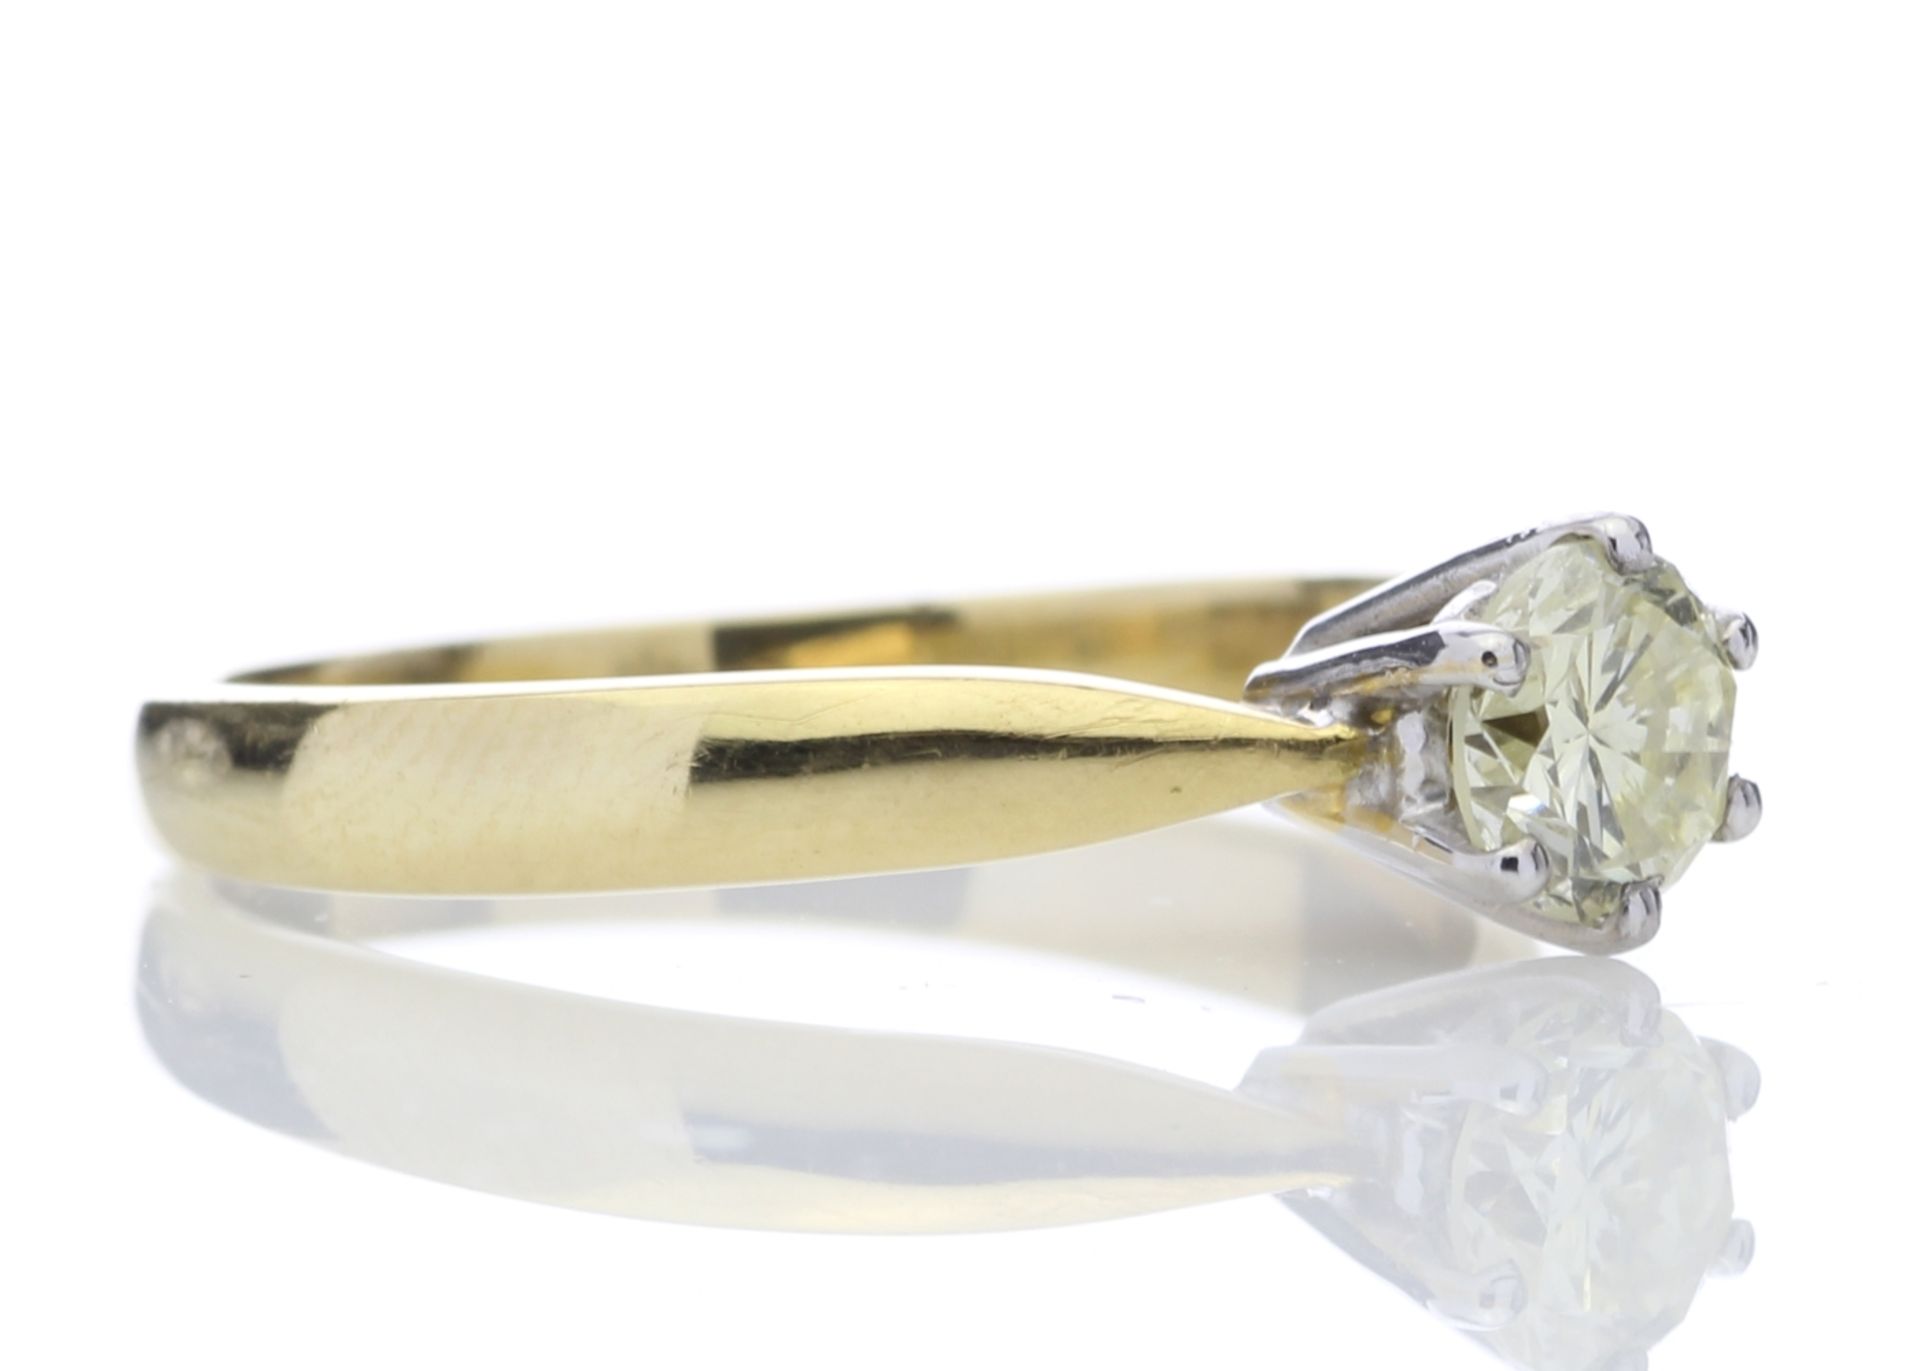 Valued by AGI £2,319.00 - 18ct Single Stone Fancy Vivid Yellow Claw Set Diamond Ring 0.56 Carats - - Image 4 of 4